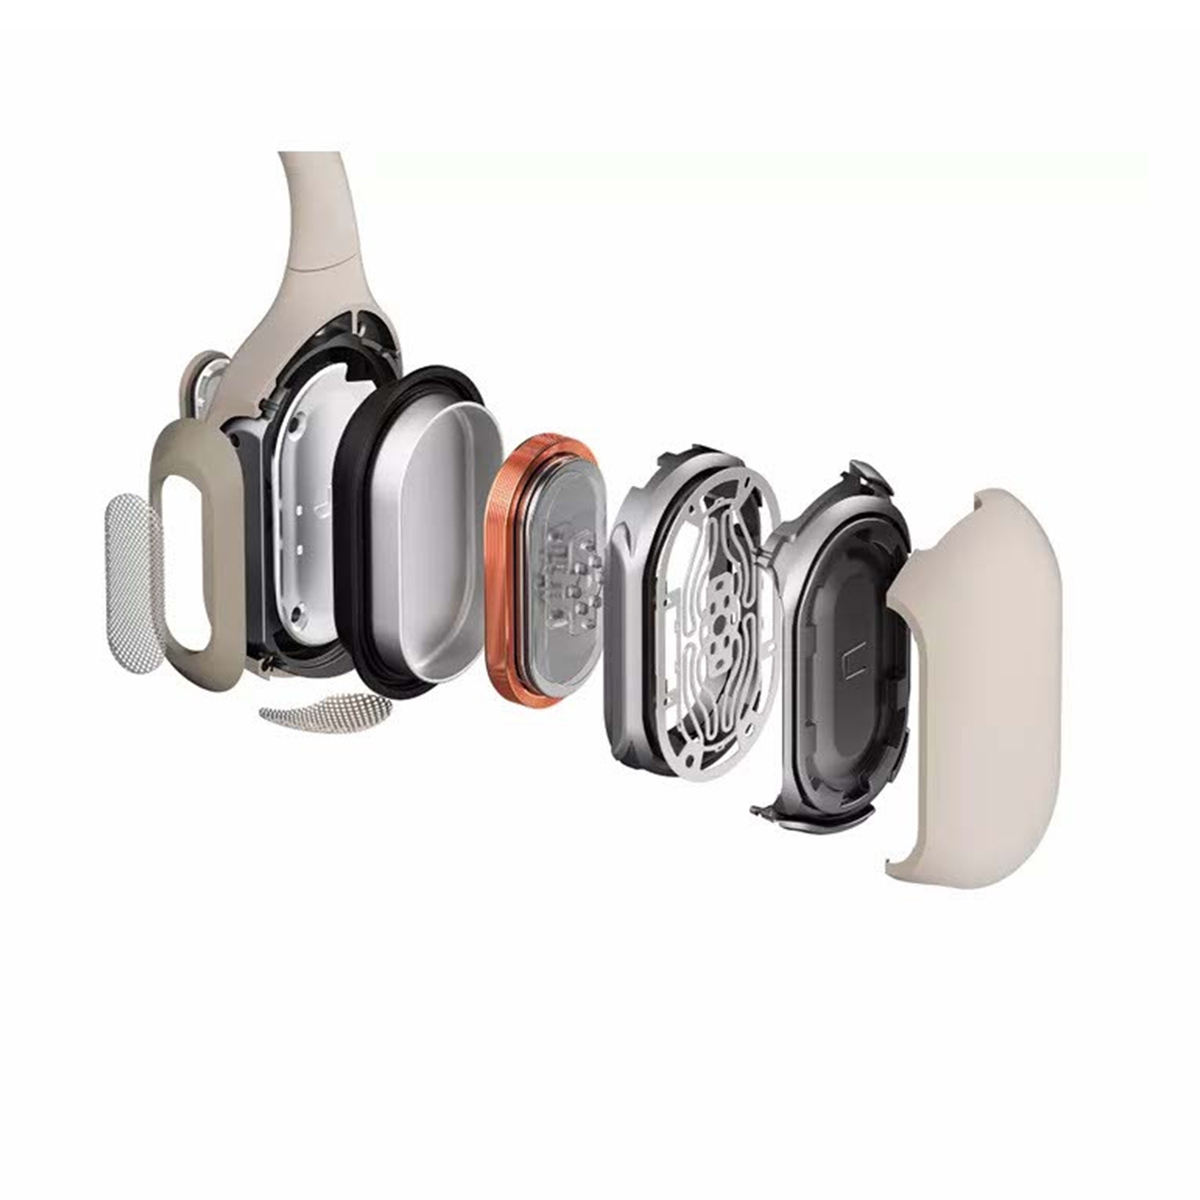 Shokz OpenRun Pro Wireless Bone Conduction Sports Headphone, Beige